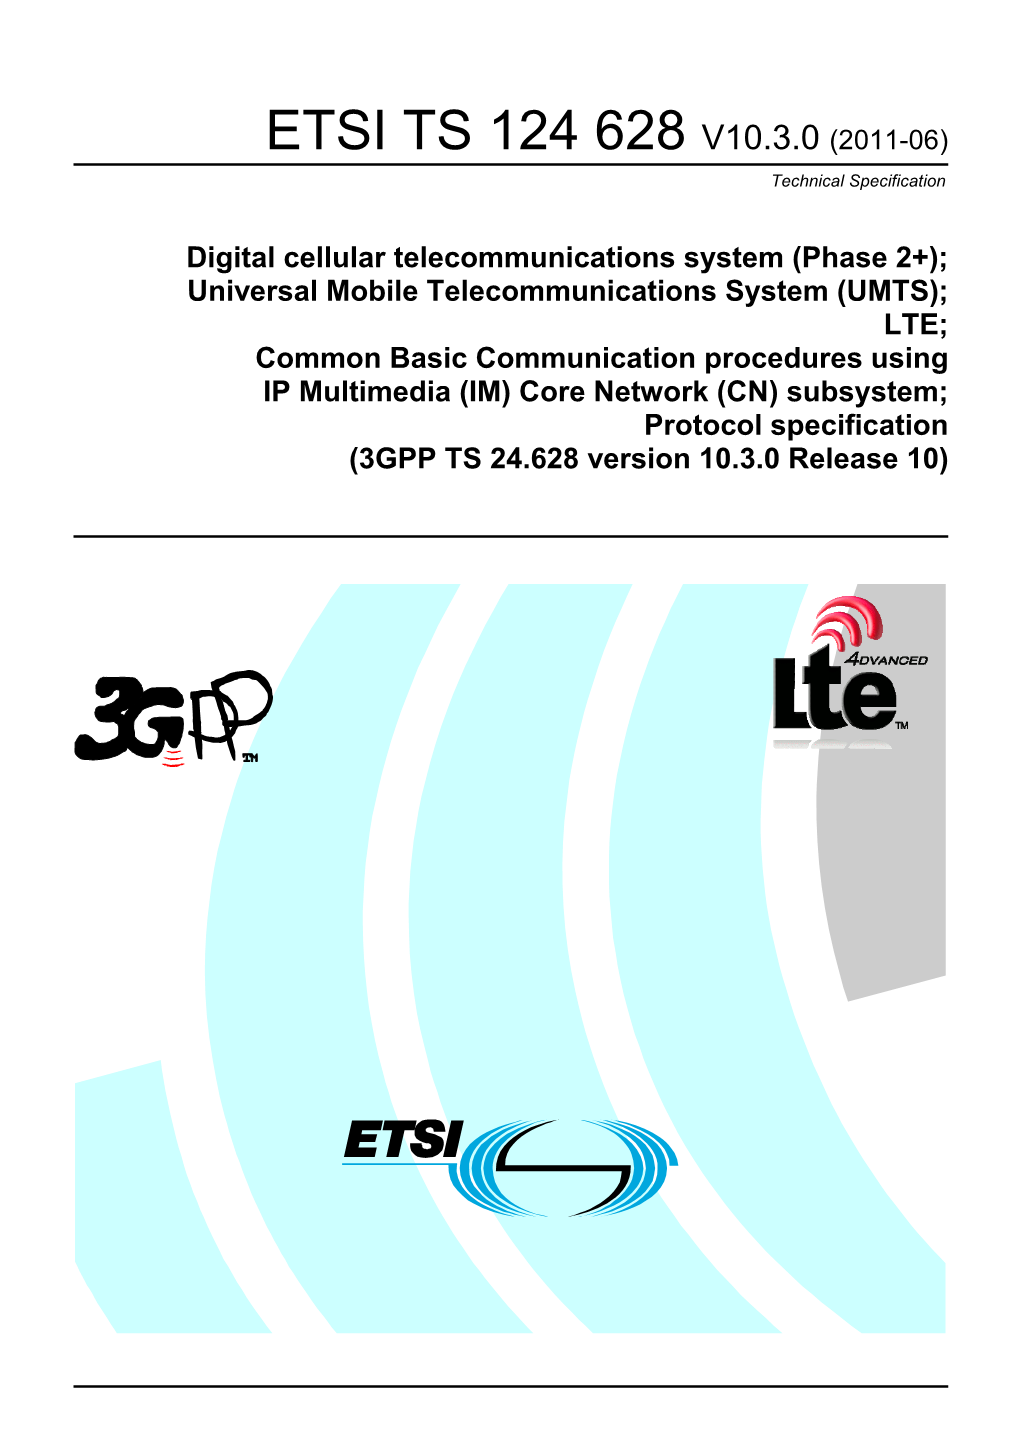 TS 124 628 V10.3.0 (2011-06) Technical Specification